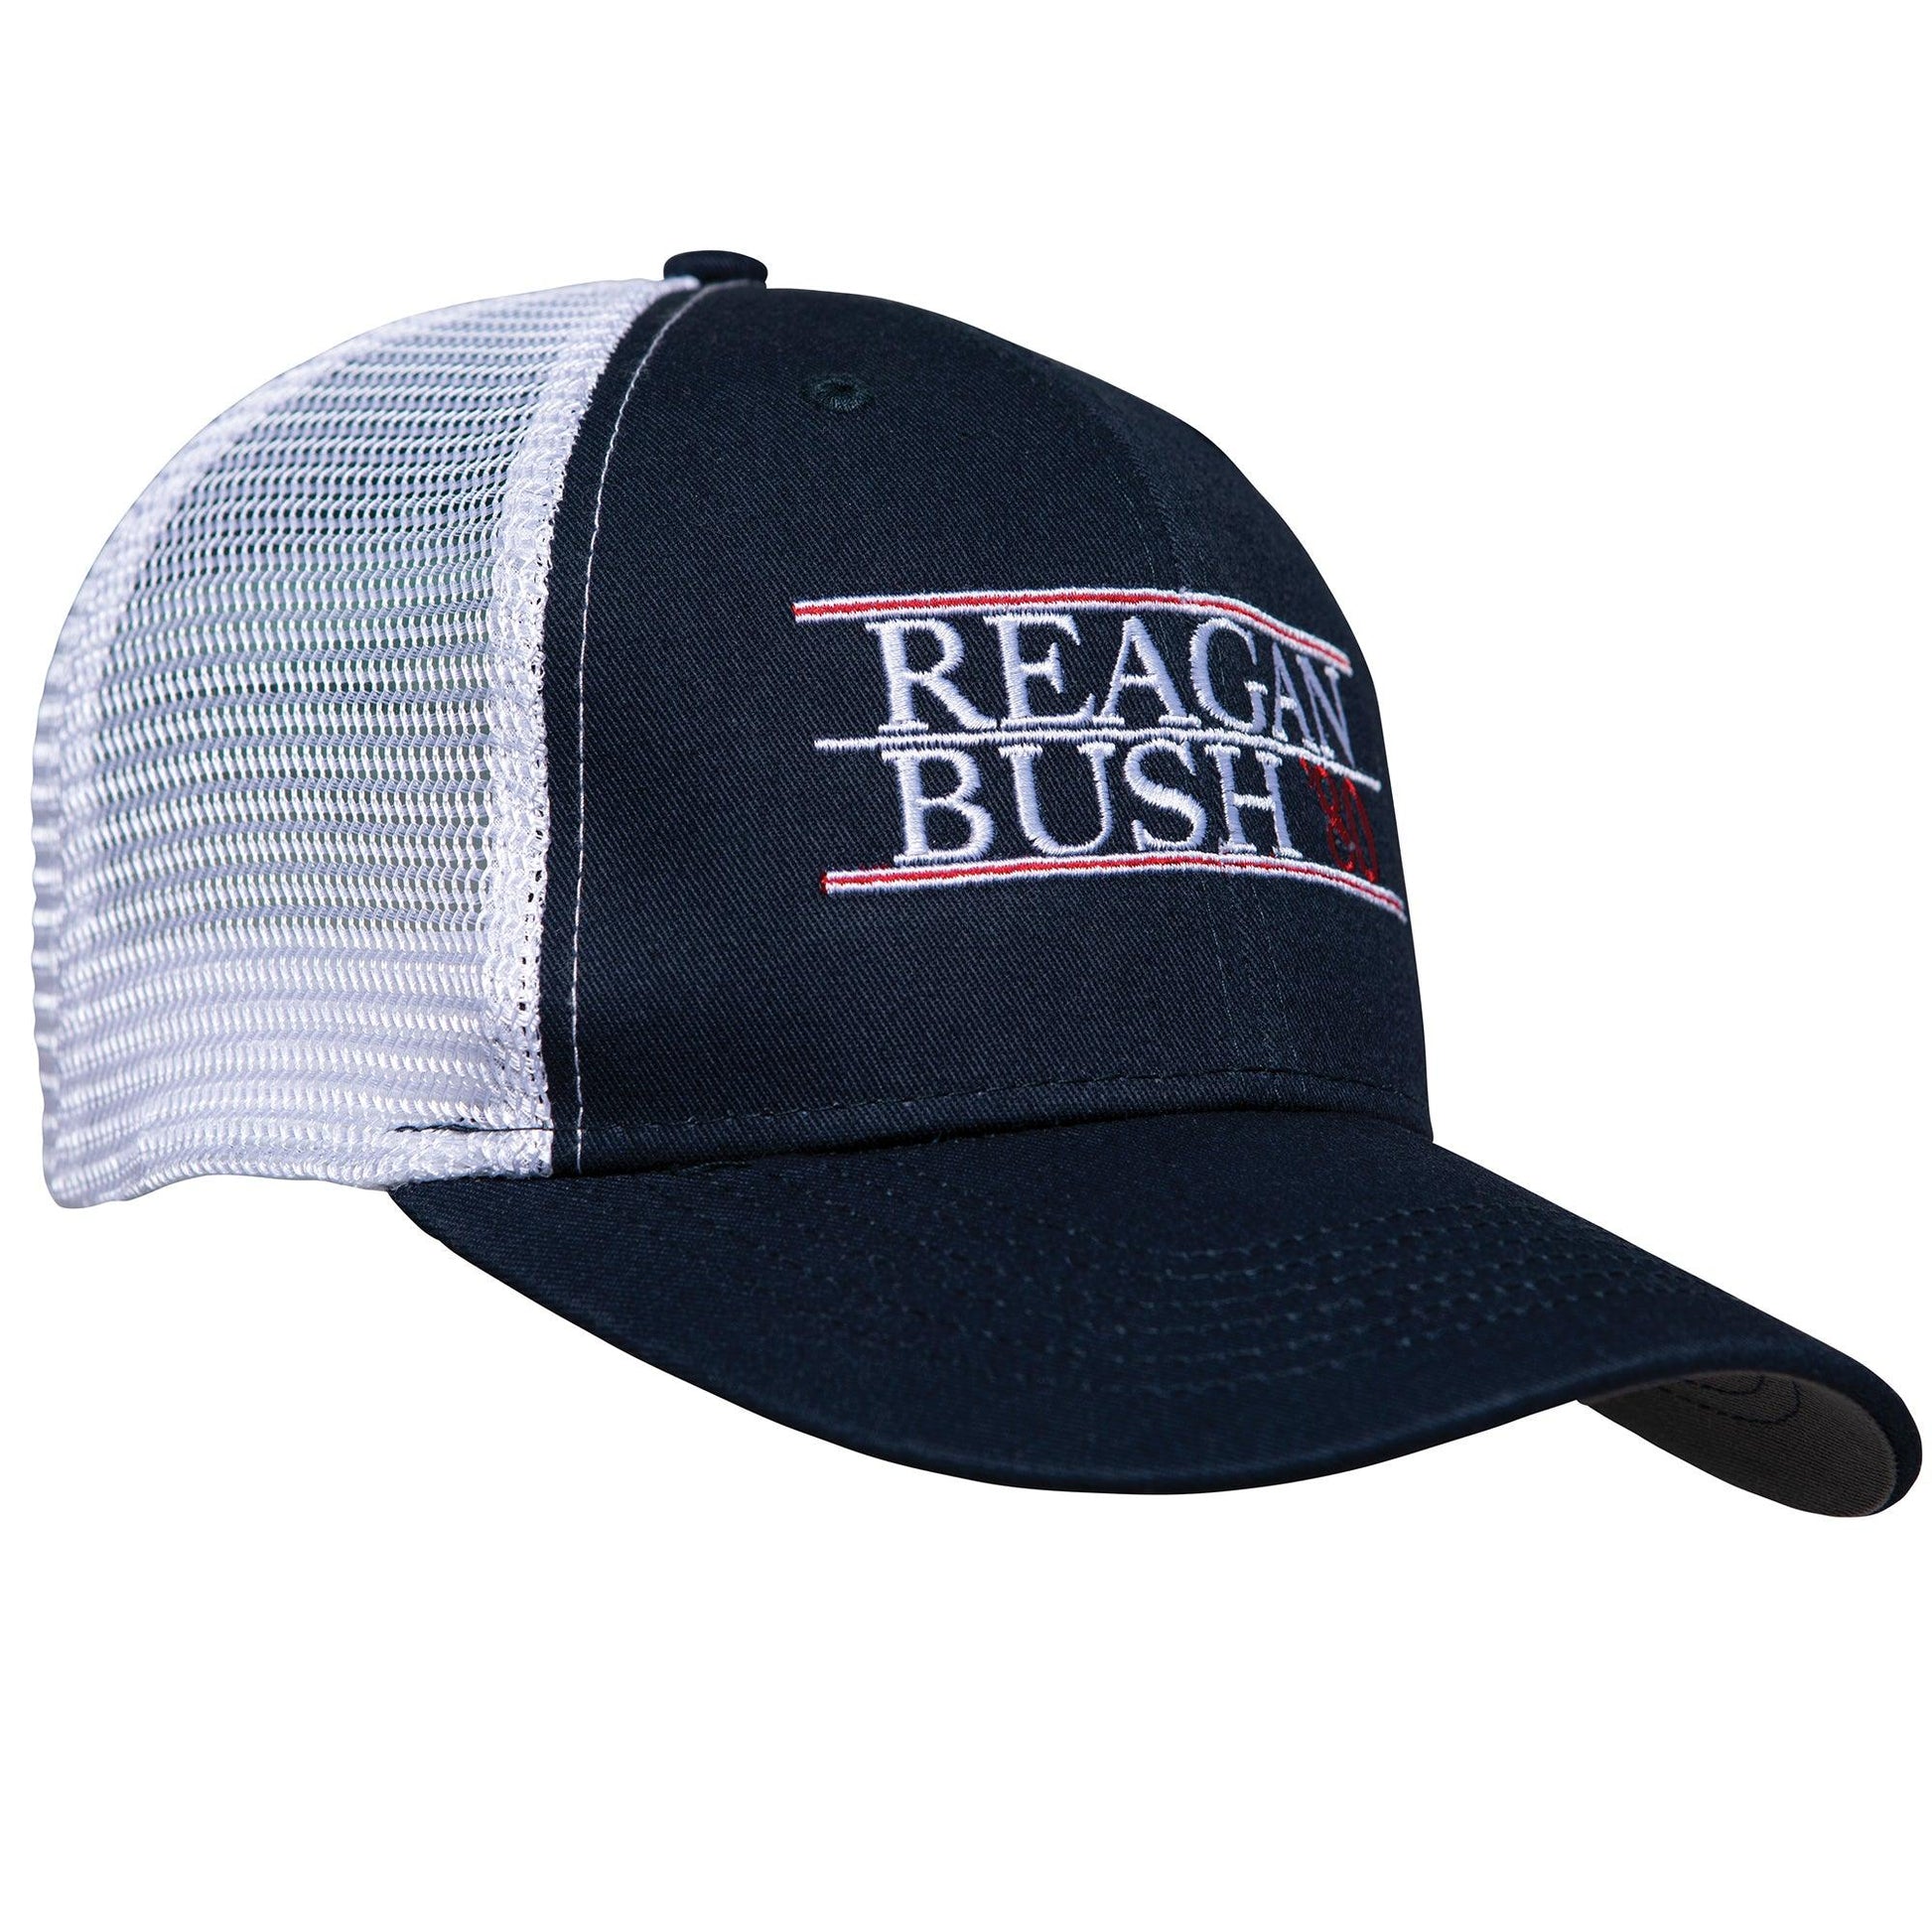 Reagan/Bush '80 Trucker Hat - Onward Reserve